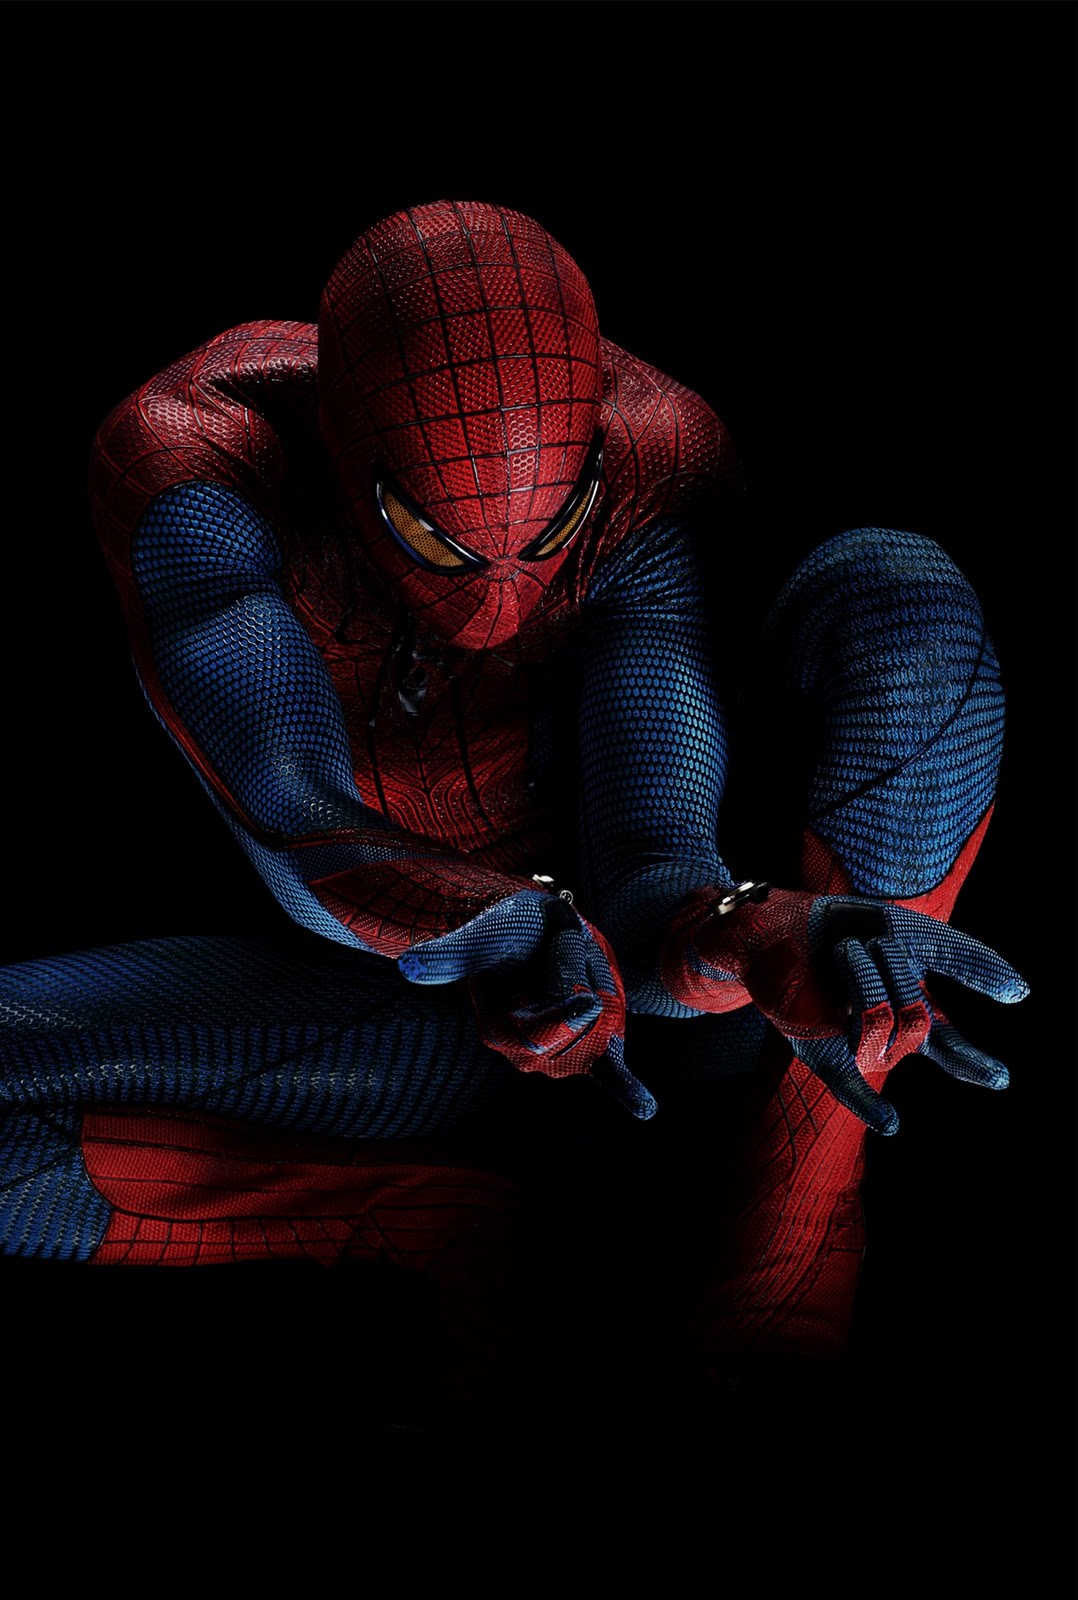 http://2.bp.blogspot.com/-goZA5oLMQqw/TimQj05K24I/AAAAAAAABOI/CL5yIOlI9lM/s1600/Amazing_Spider-Man.jpg